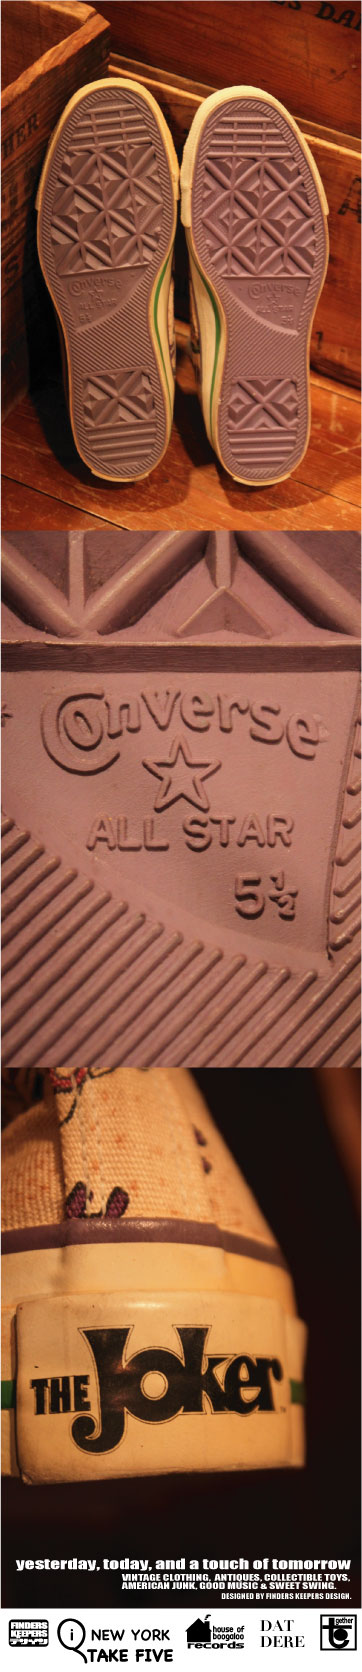 画像: CONVERSE D.STOCK "JOKER" ALL STAR  "MADE IN U.S.A.